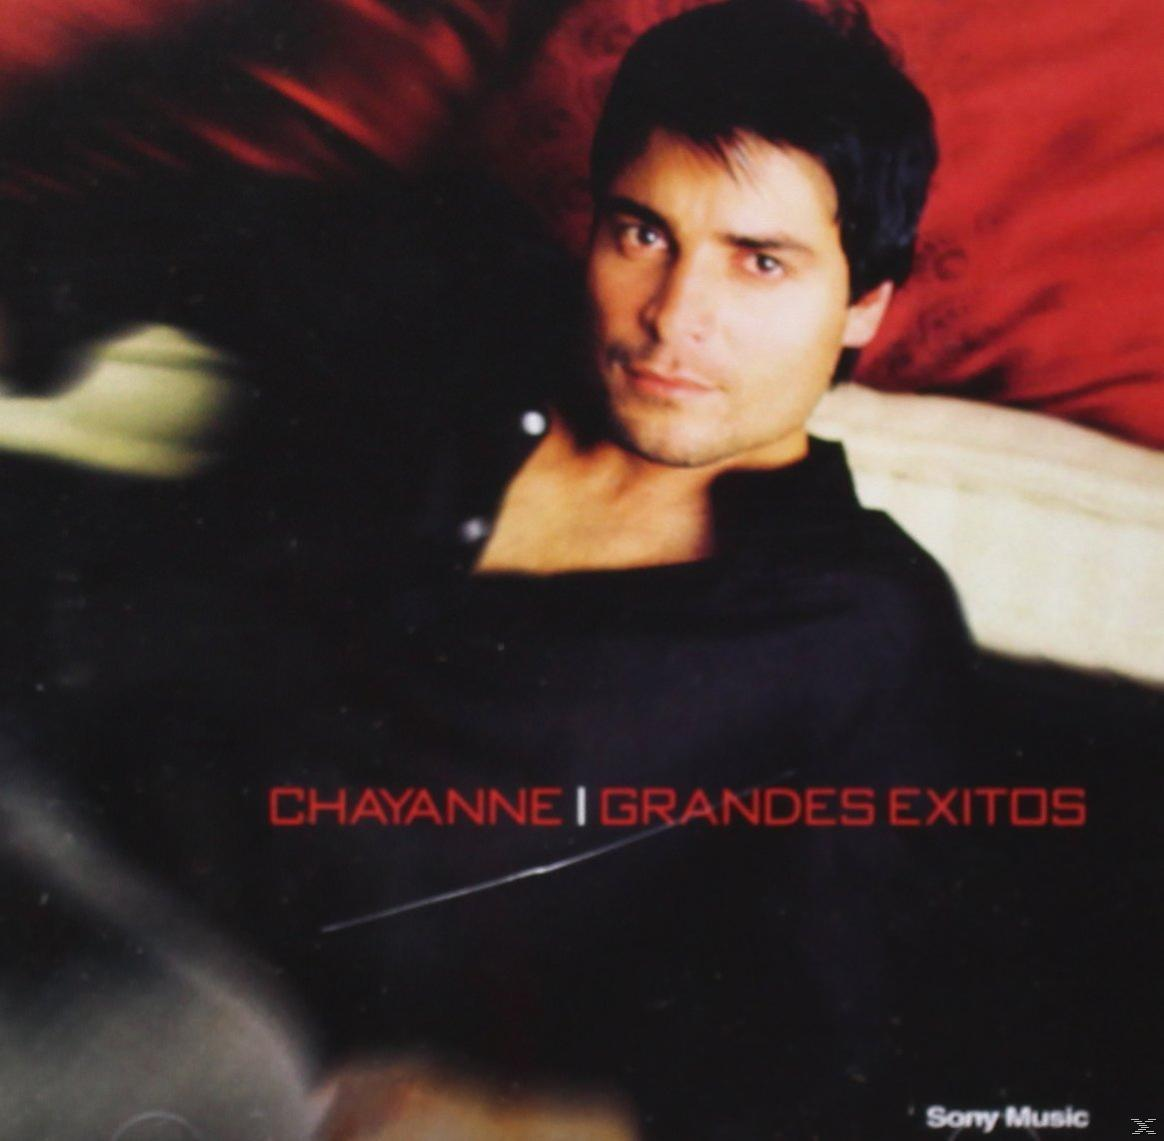 - - Grandes (CD) Chayanne Exitos